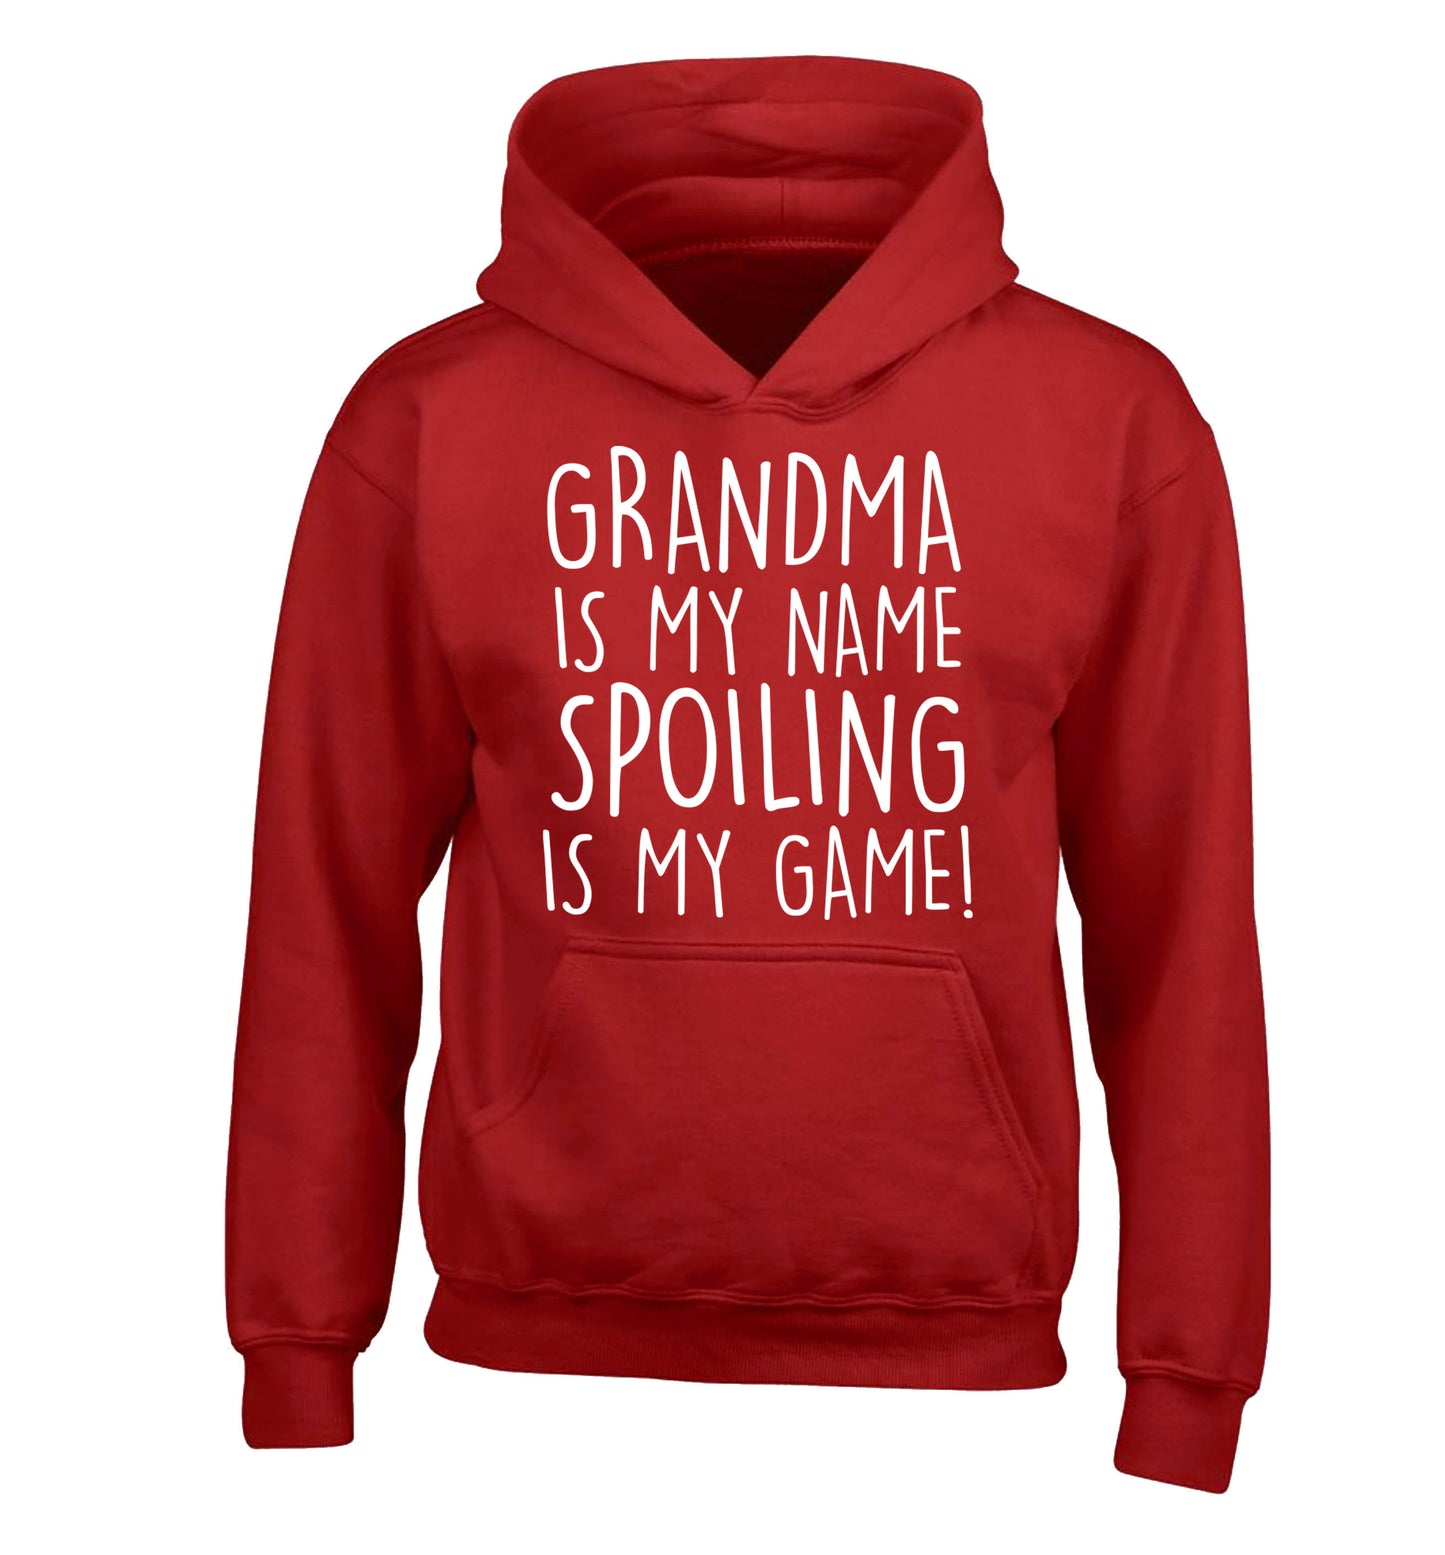 Grandma is my name, spoiling is my game children's red hoodie 12-14 Years